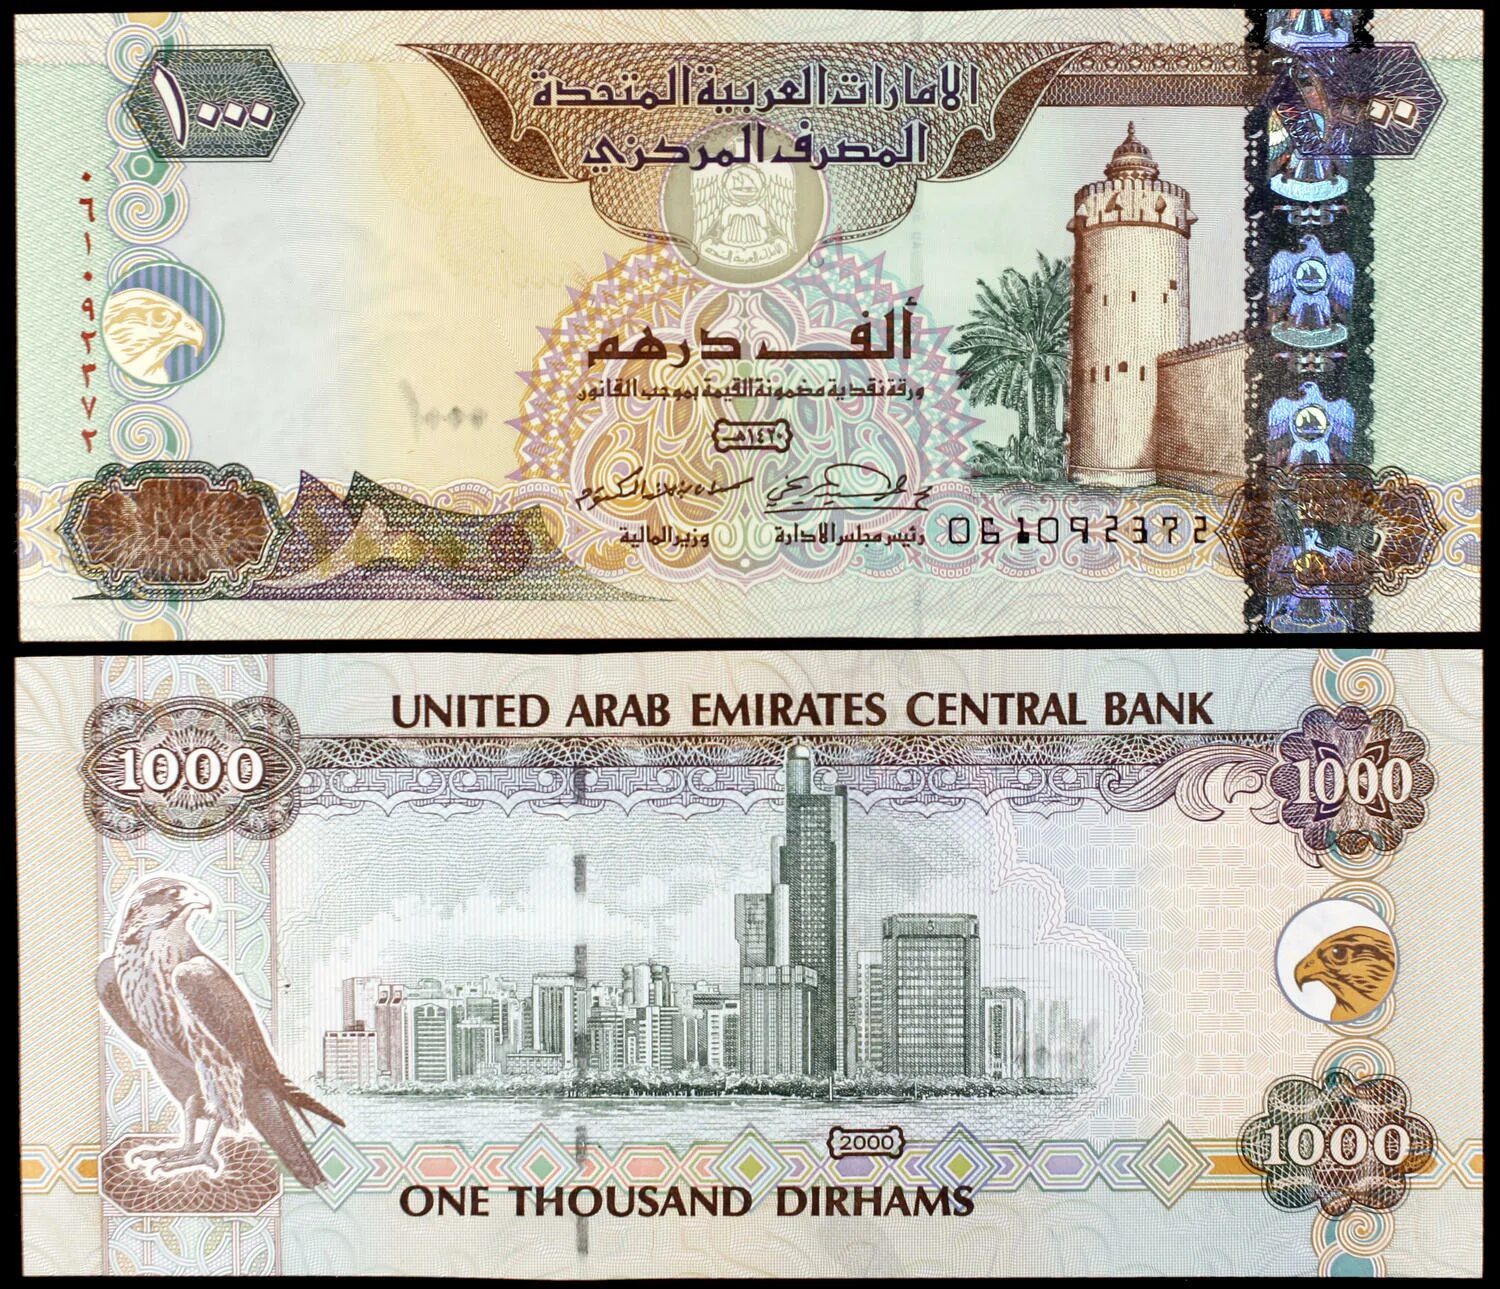 315 дирхам. Валюта ОАЭ 1000. Банкнота араб эмираты 1000. Дирхам эмираты купюра. 100 Дирхам купюра.